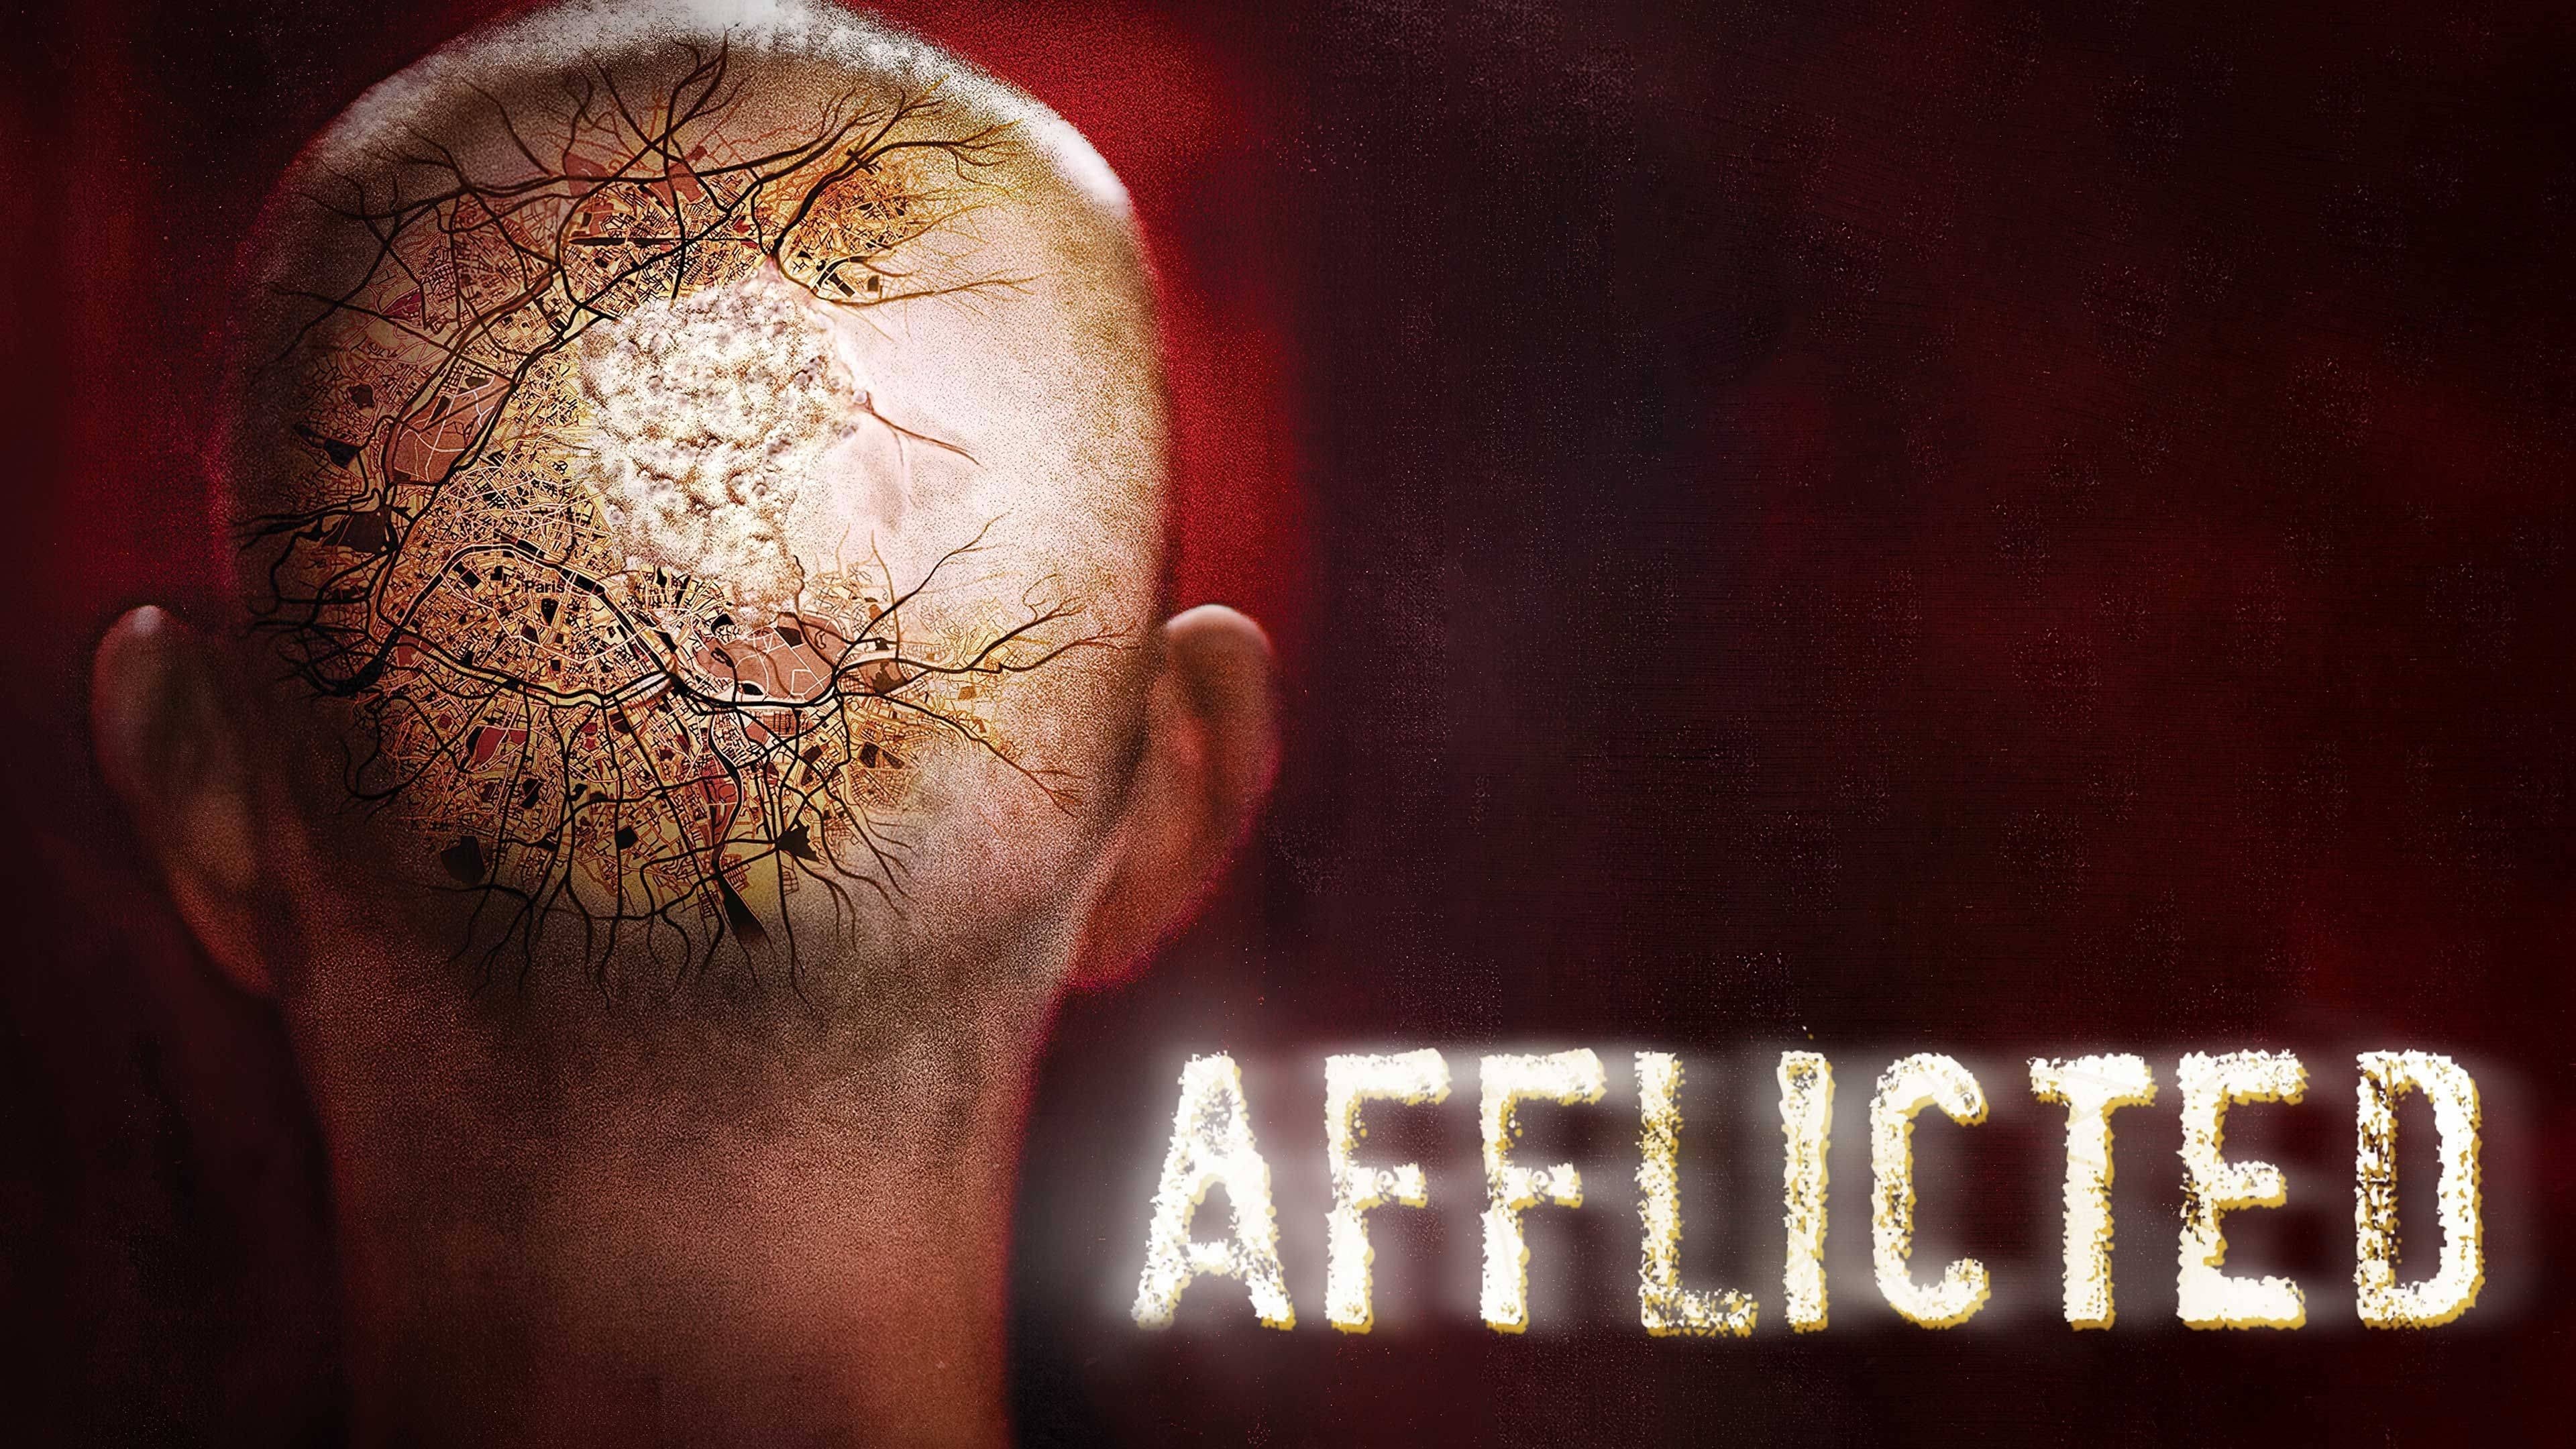 Afflicted (2014)